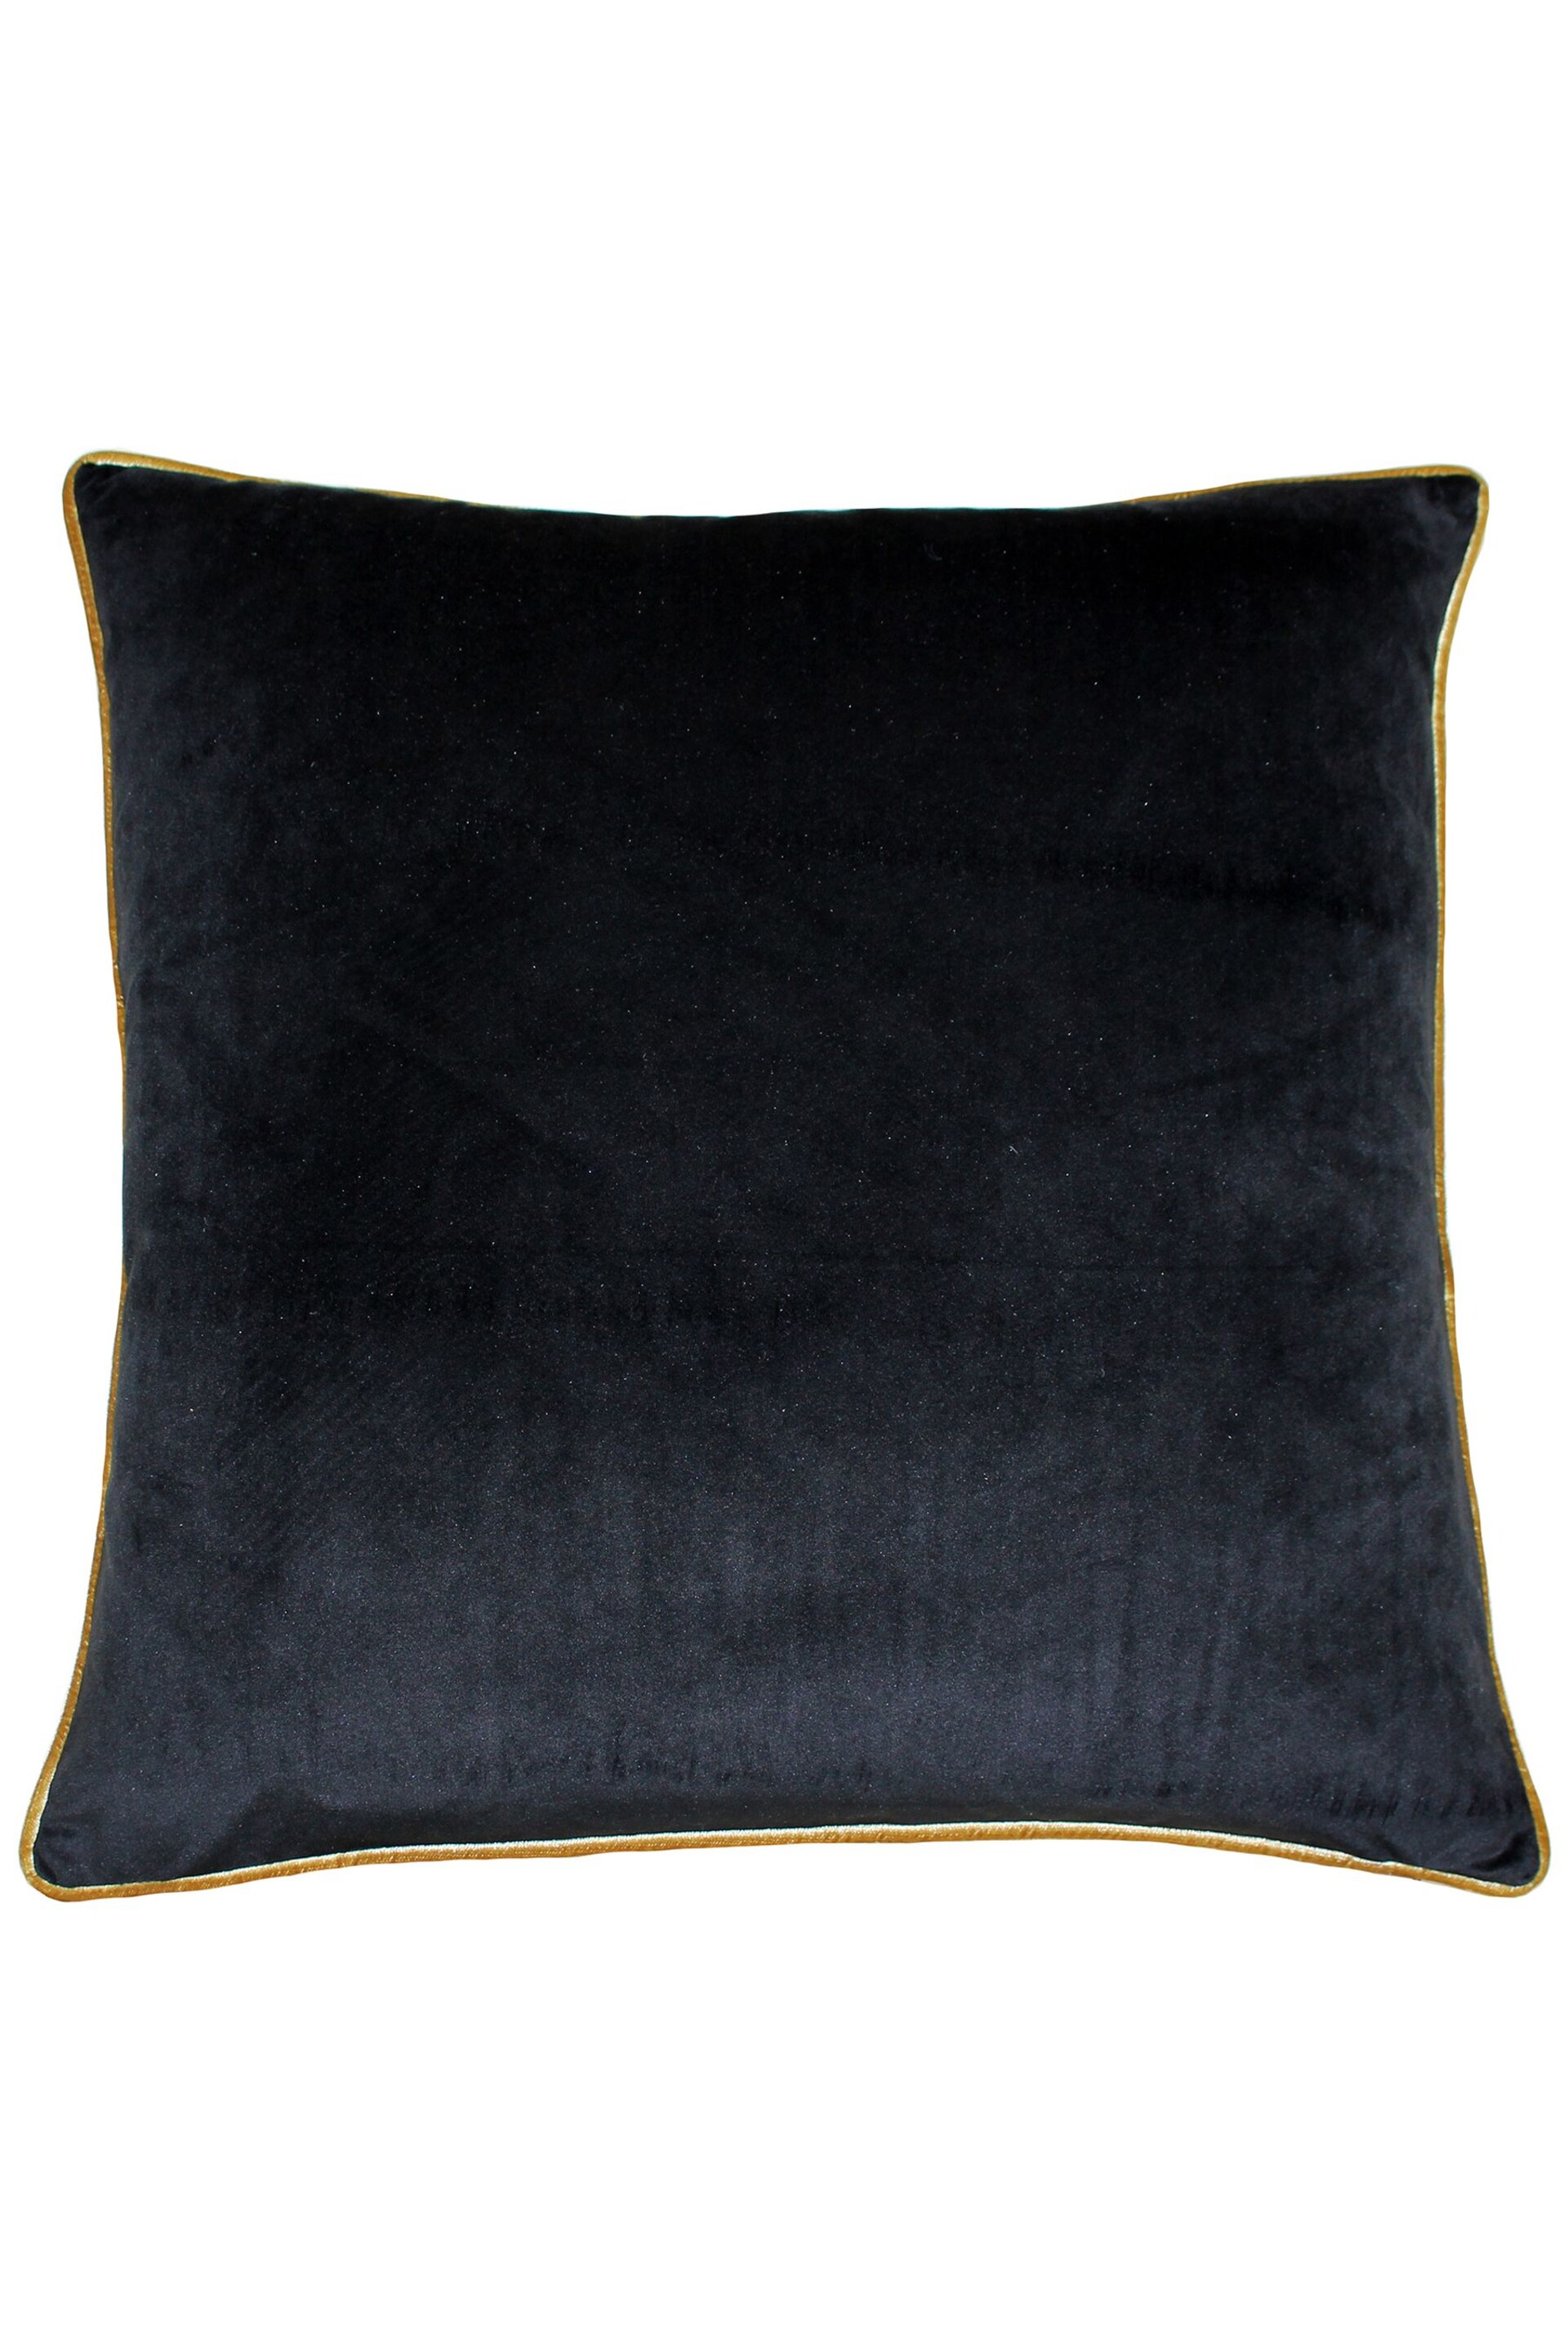 Riva Paoletti Black/Gold Meridian Velvet Polyester Filled Cushion - Image 1 of 3